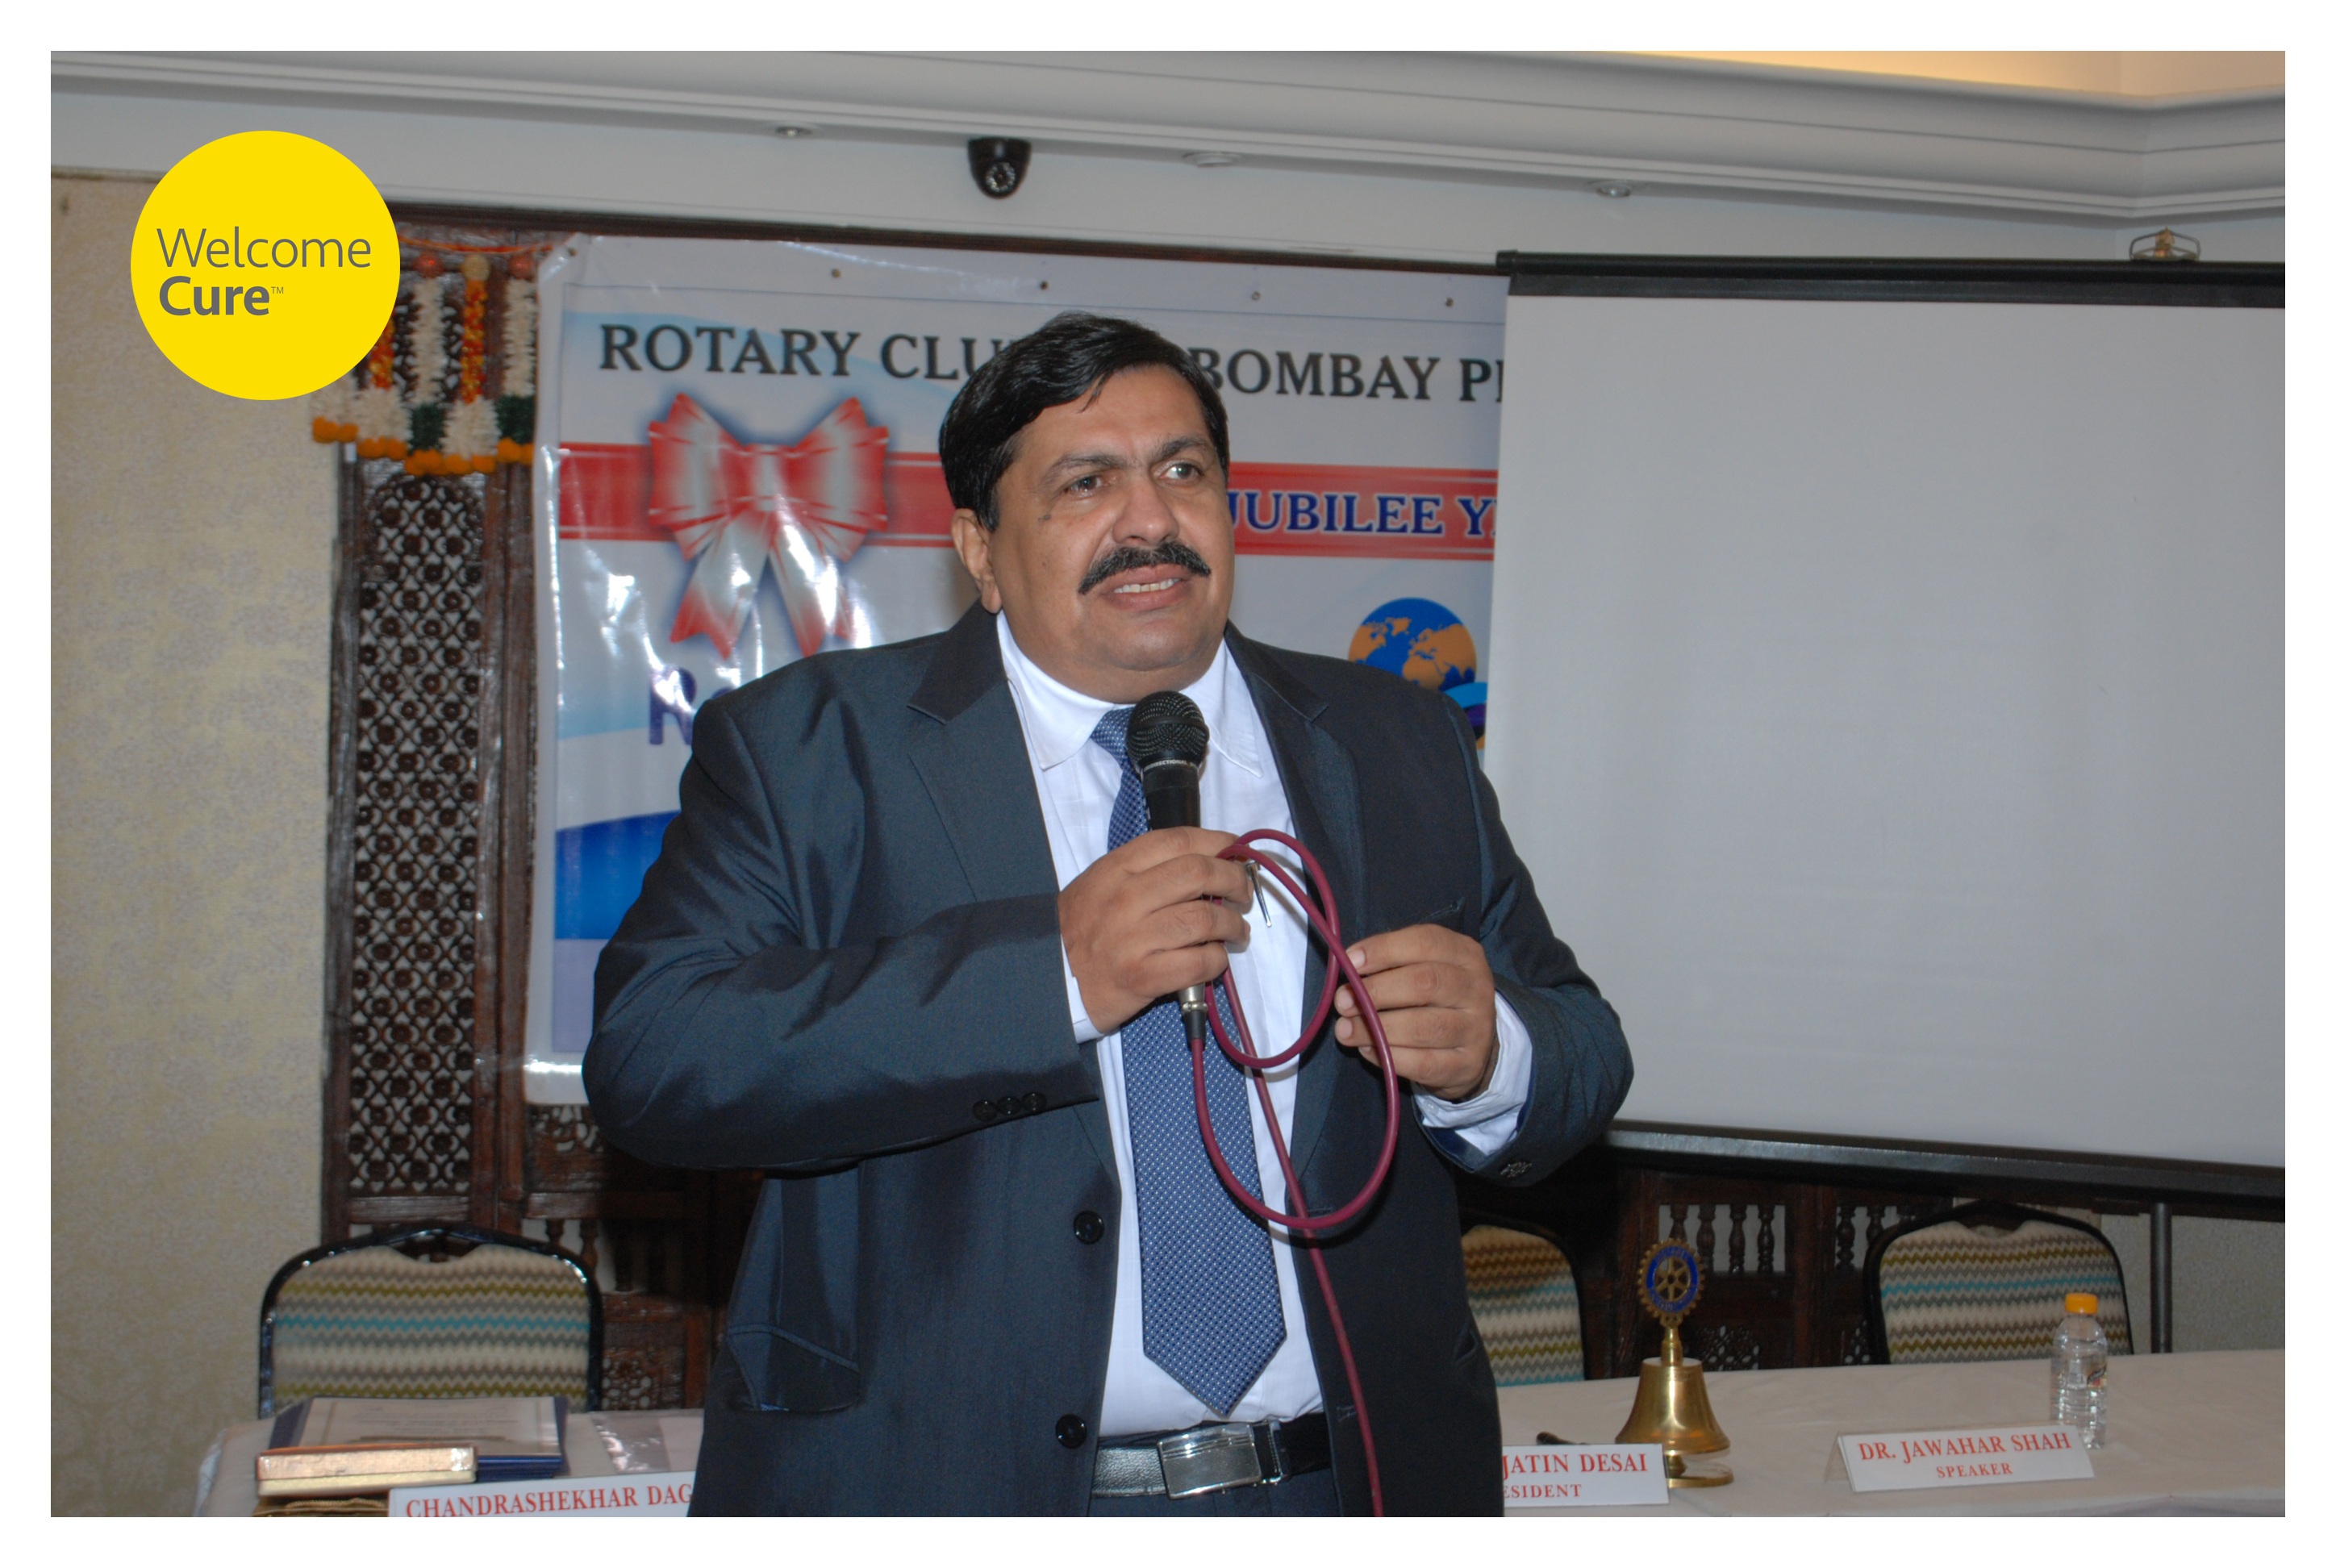 Rotary club event Image1